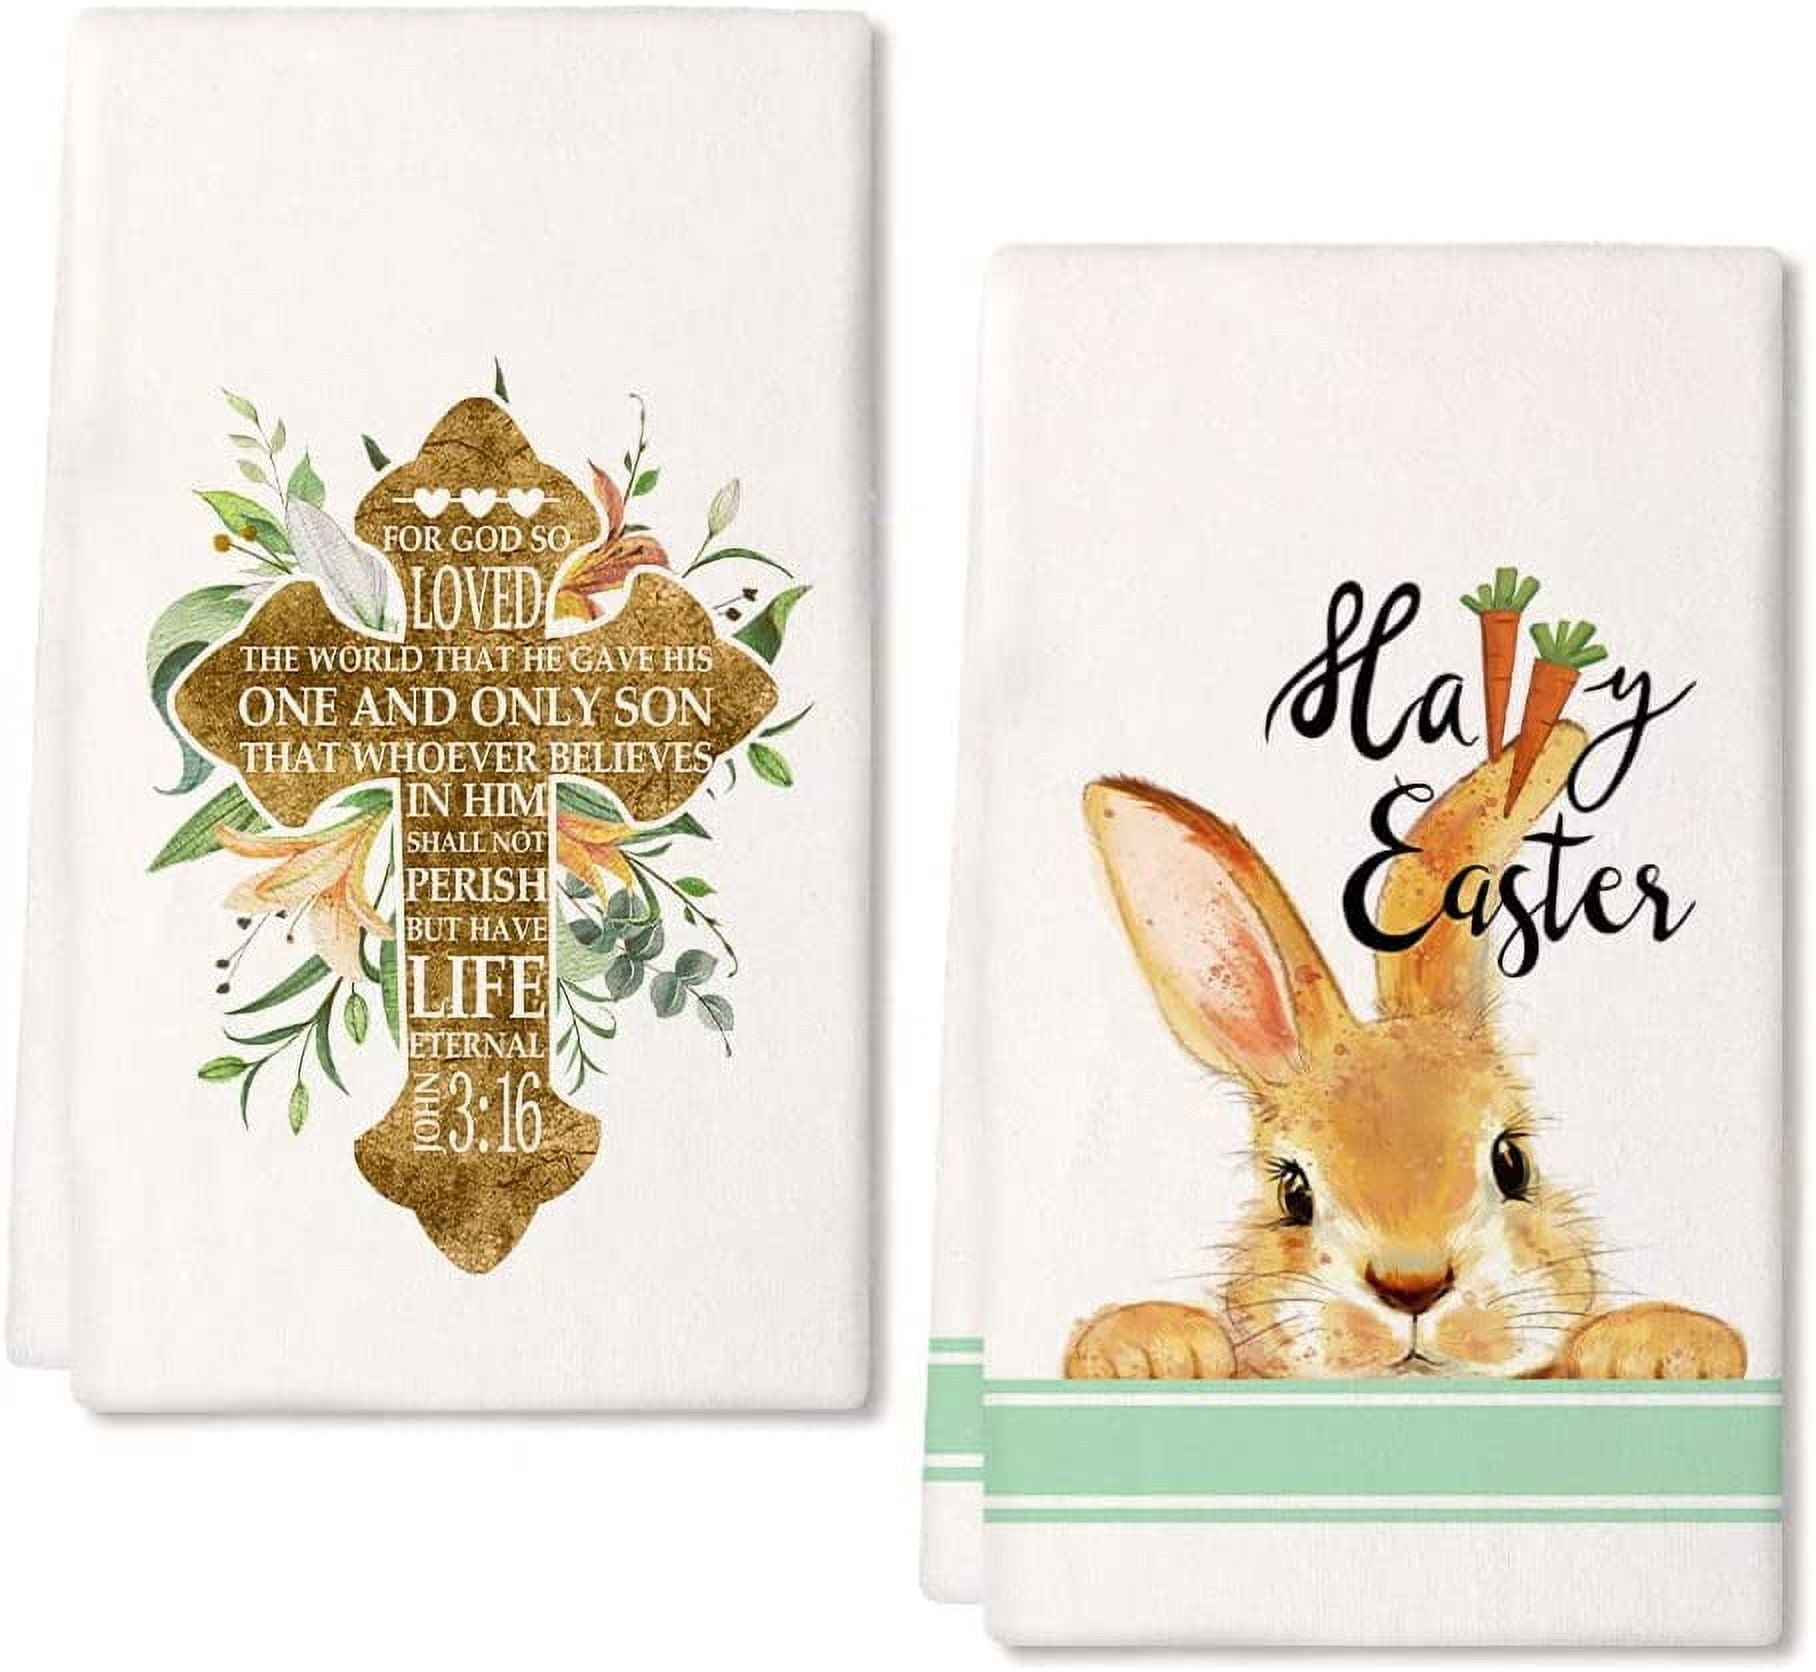 Hand Towel - Kitchen Hand Towel - Easter Hanging Towel - Easter Kitchen  Towel - Carrots